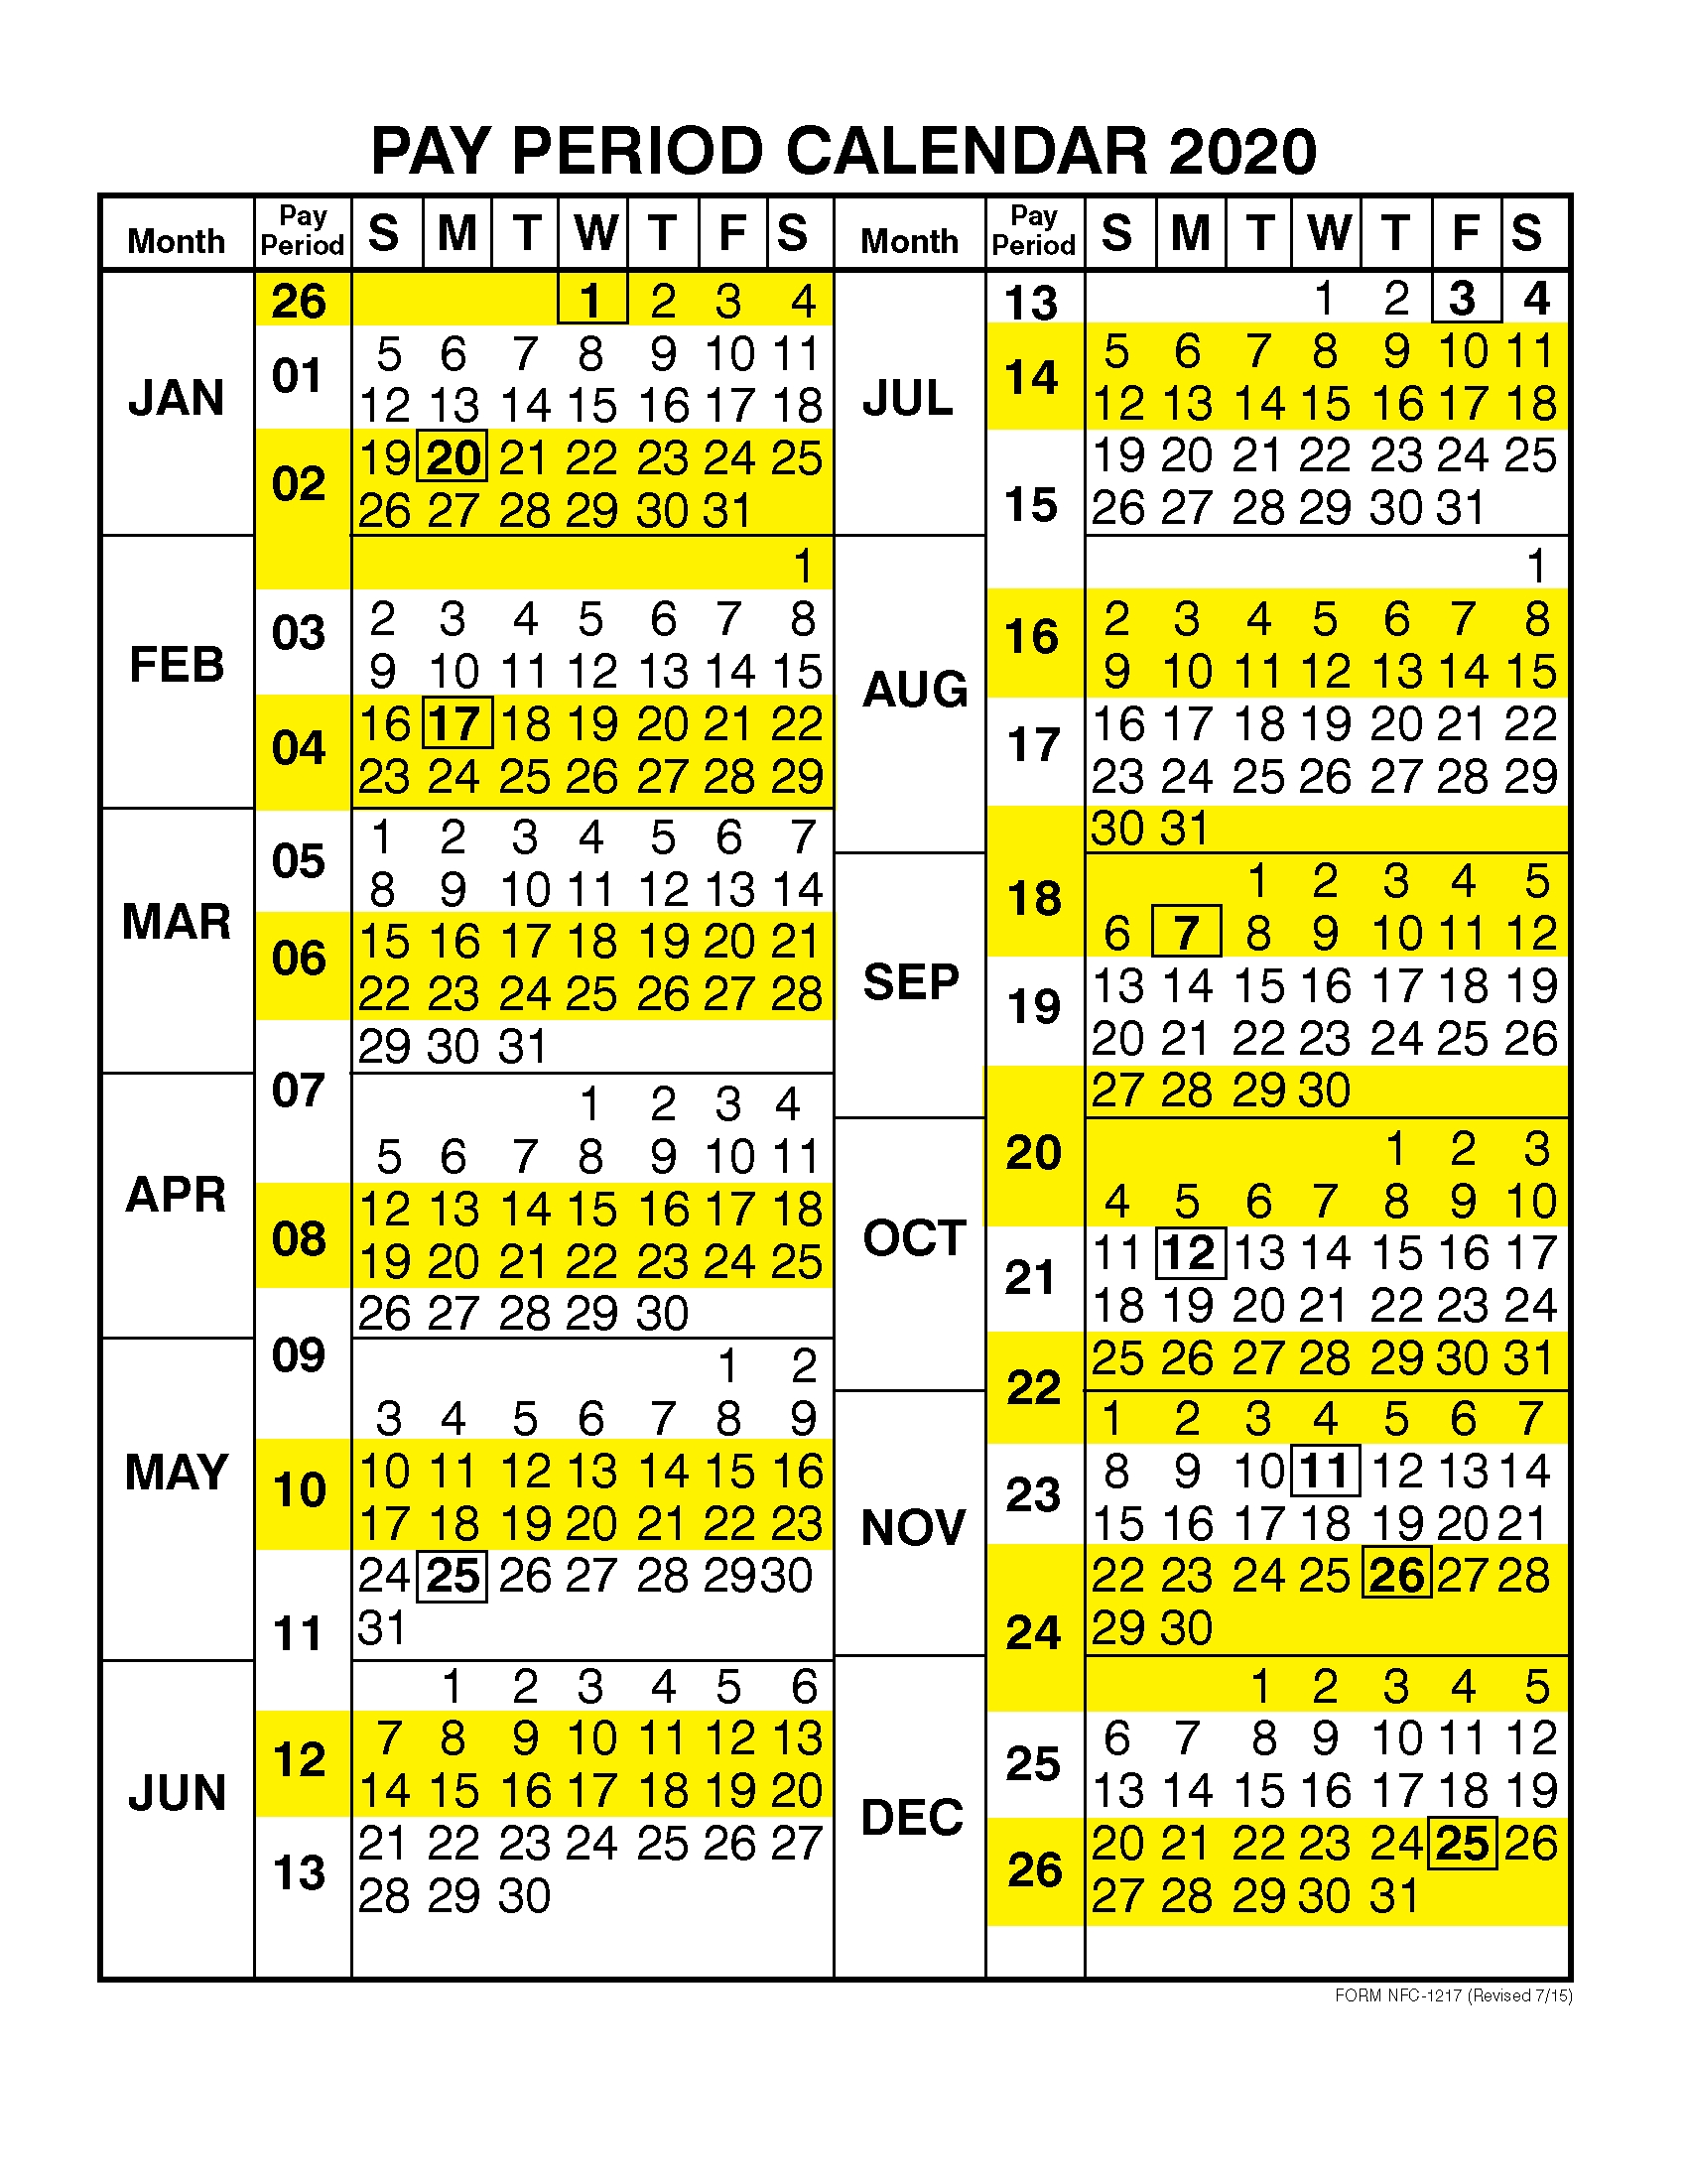 Get 2021 Payroll Calendar Federal Government